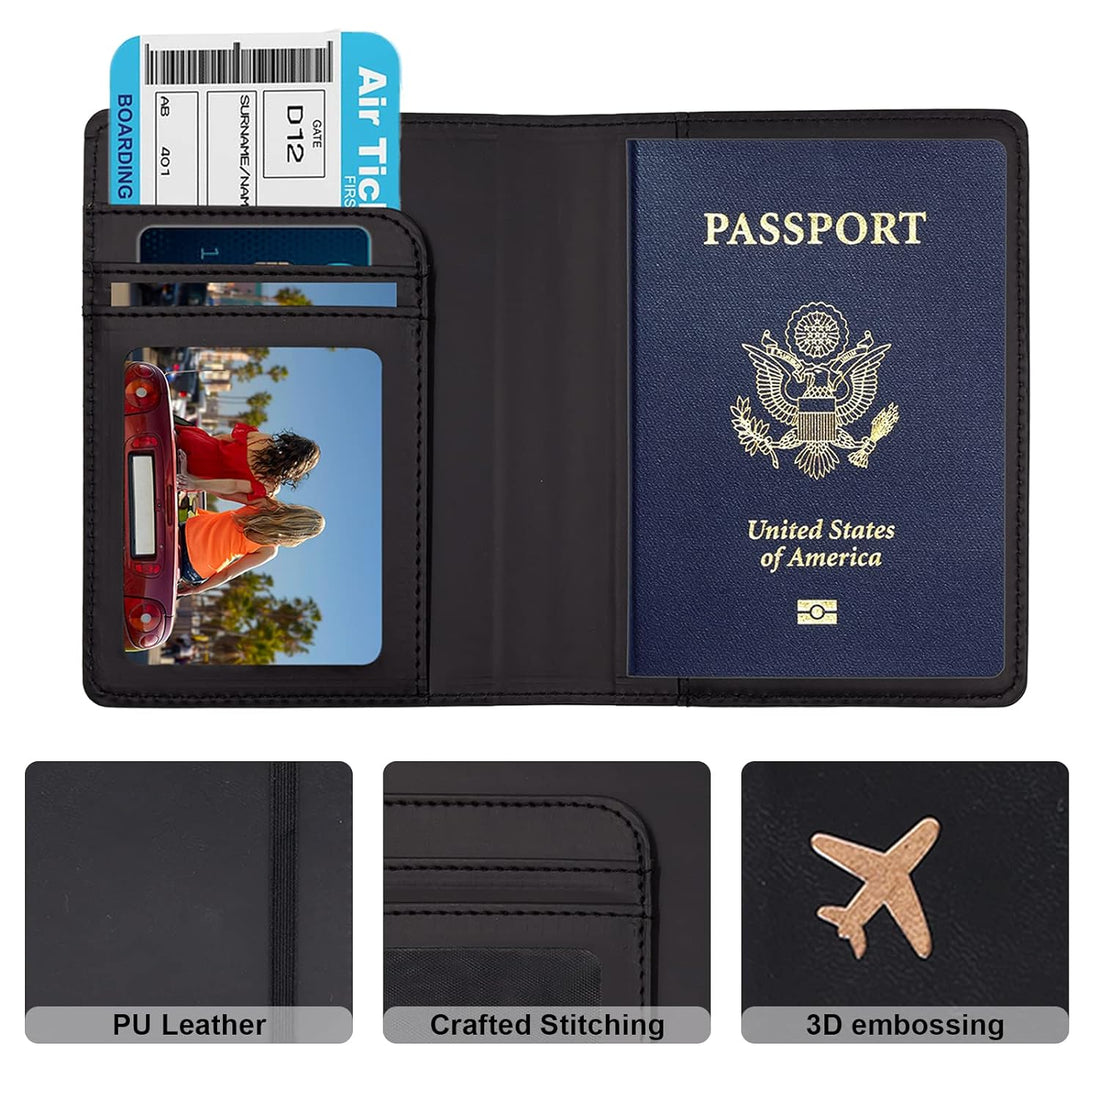 Deziliao Passport and Vaccine Card Holder Combo, PU Leather Passport Holder with Vaccine Card Slot, Passport Wallet for Men and Women, Black, Basic